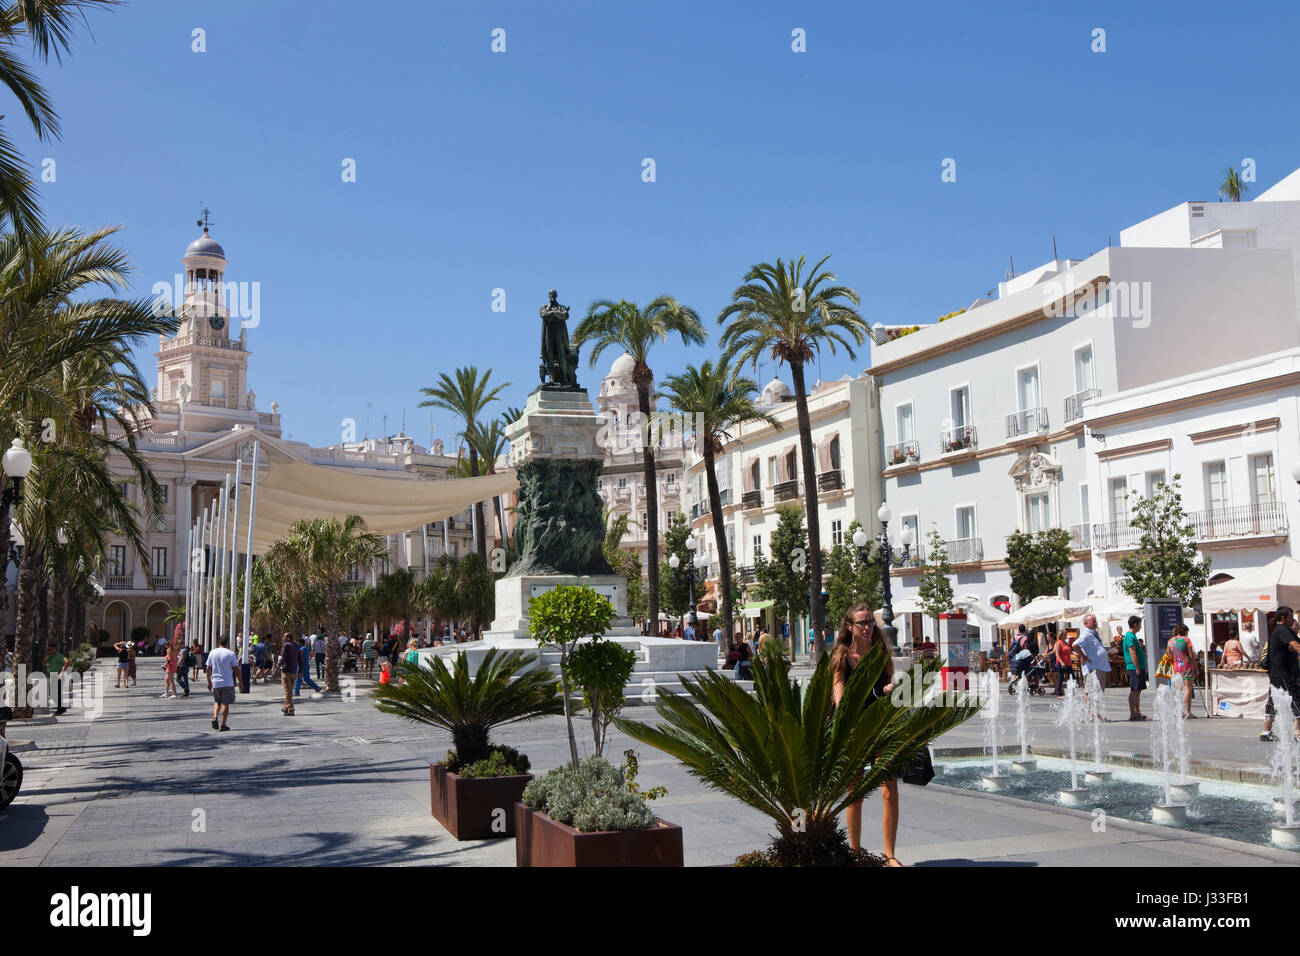 La Plaza de San Juan de Dios, square in the historical town of Cadiz, Cadiz Province, Andalusia, Spain, Europe Stock Photo